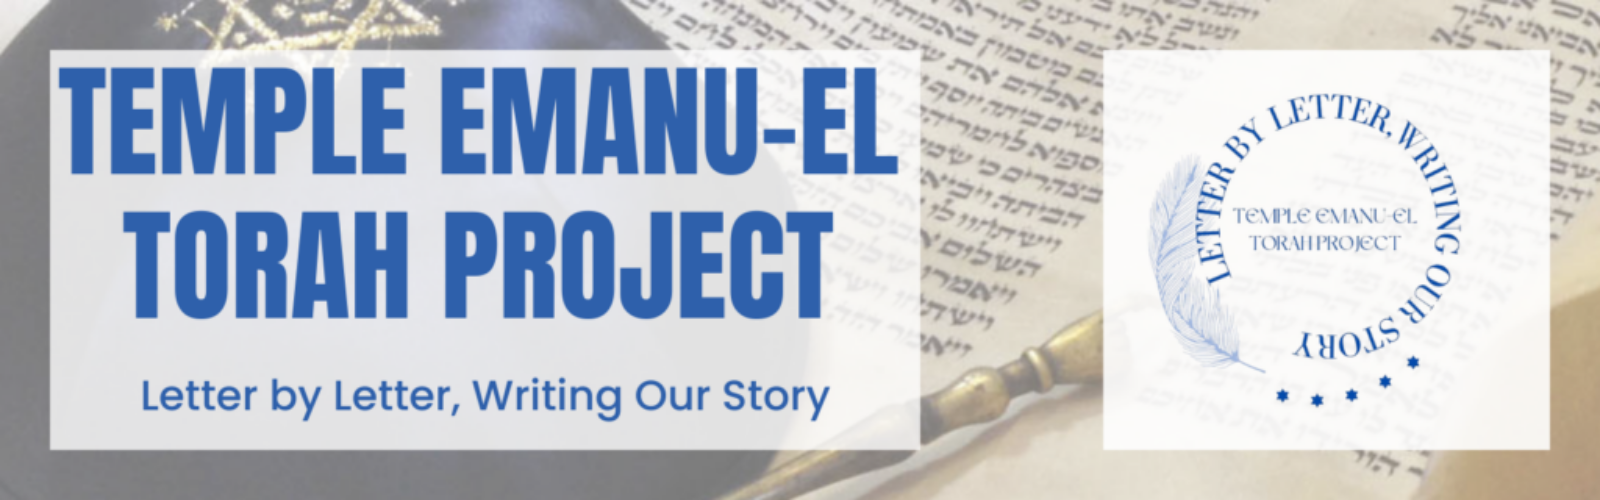 Torah project banner (1)